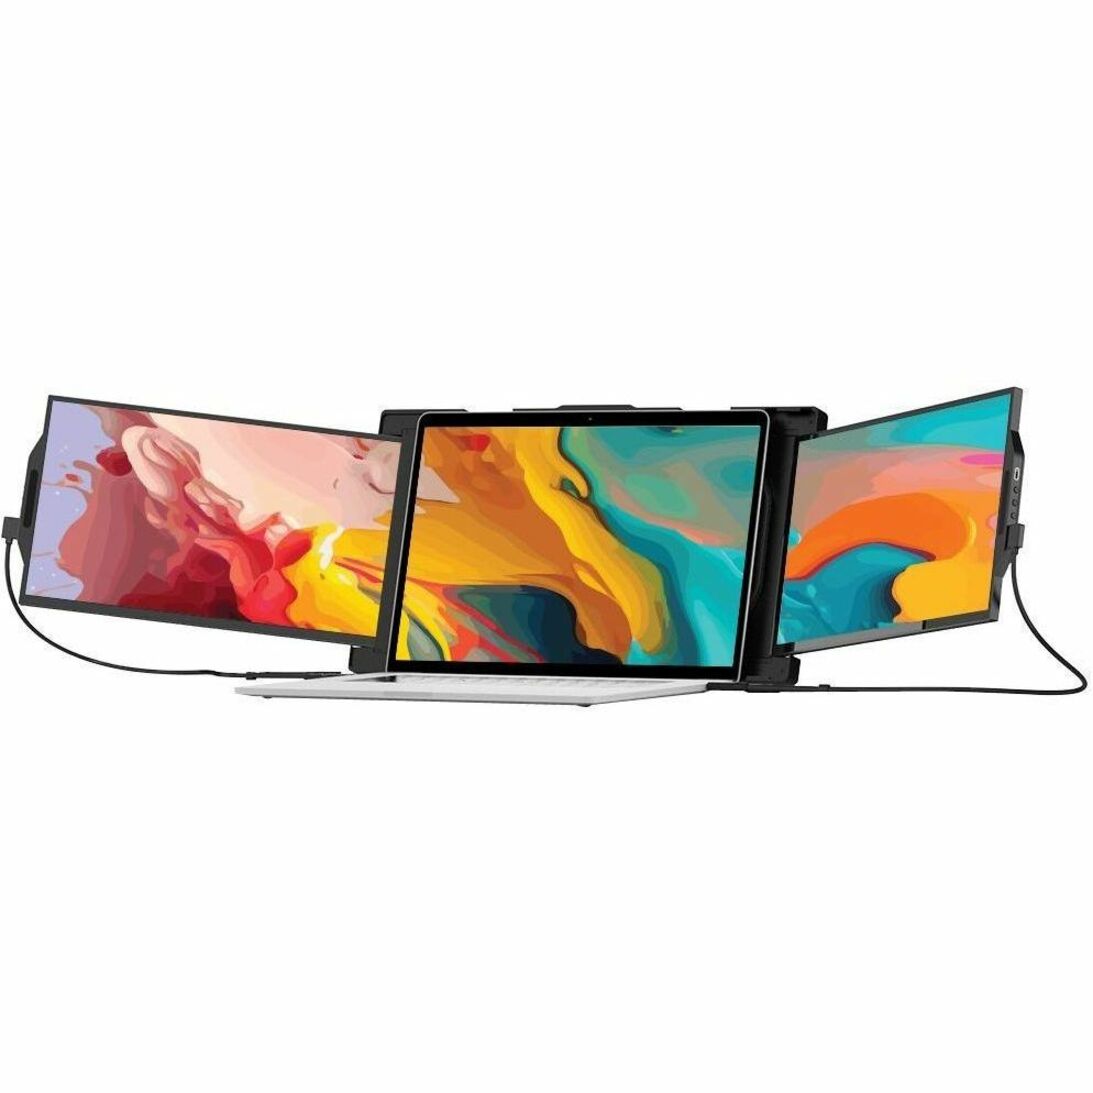 Mobile Pixels TRIO Max 101-1004P04 Widescreen LCD Monitor, Full HD, Plug & Play